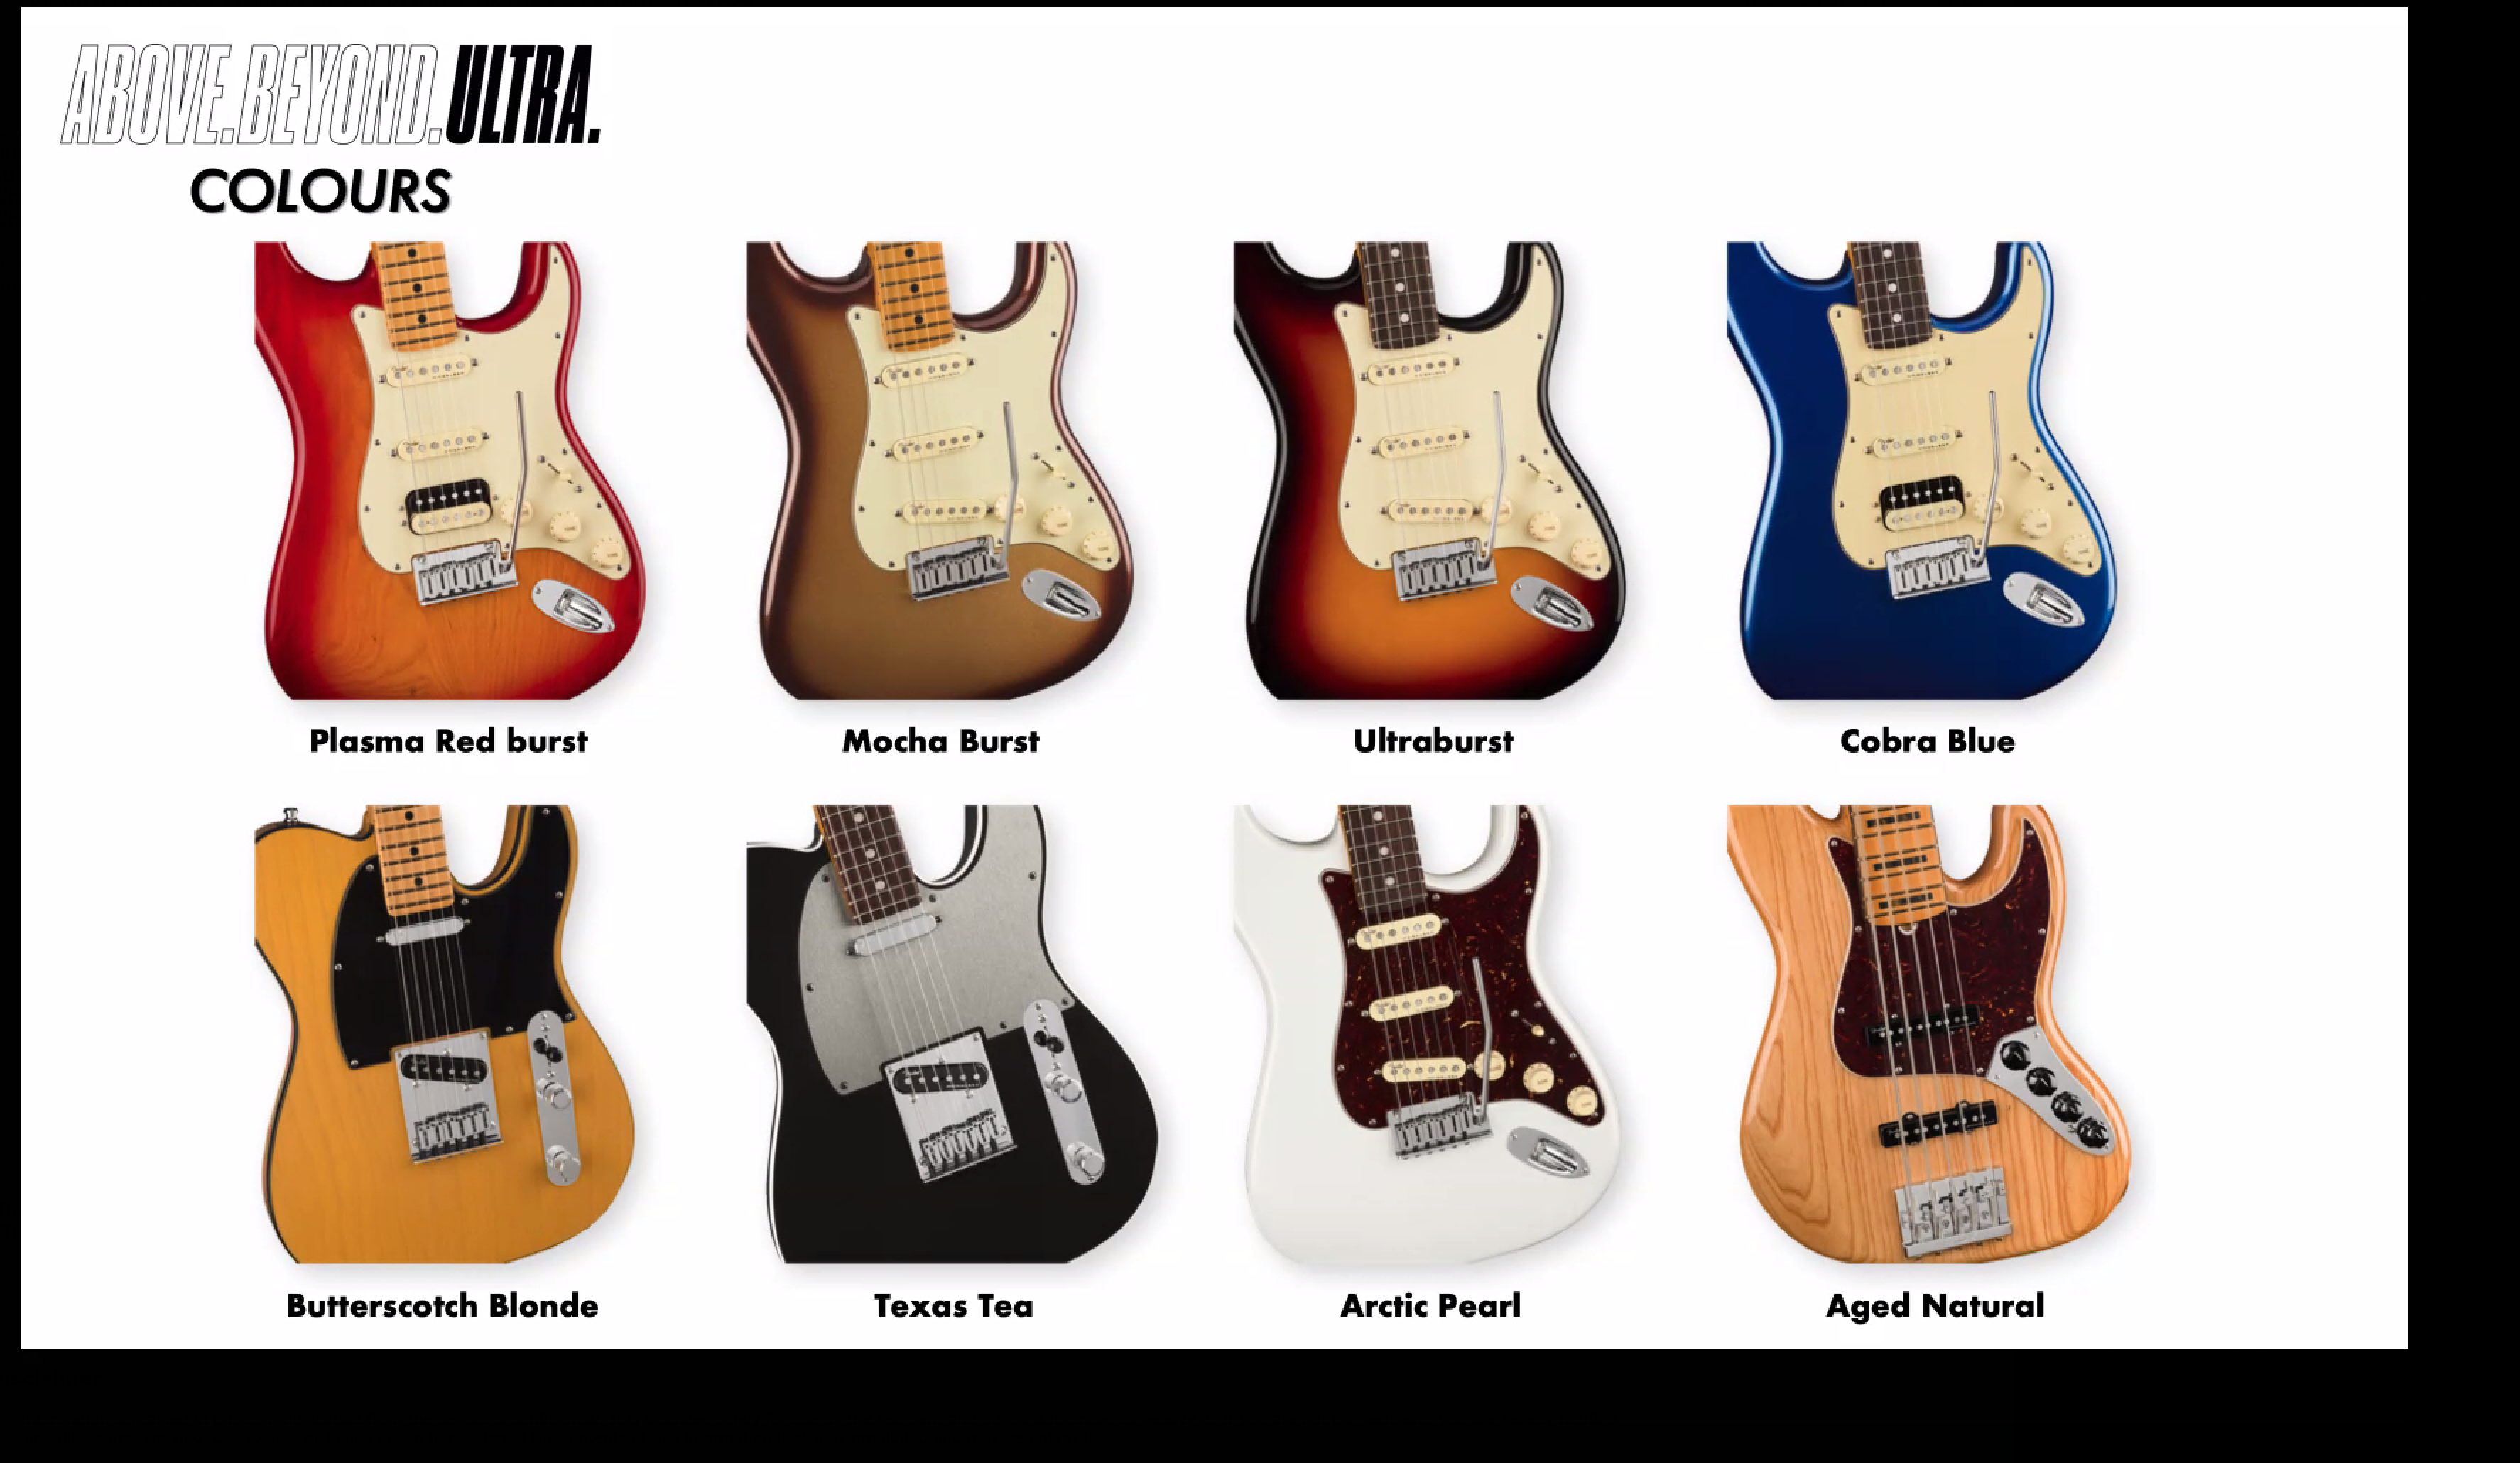 gusto Miau miau Largo Nueva Fender American Ultra Series - Cutaway Guitar Magazine